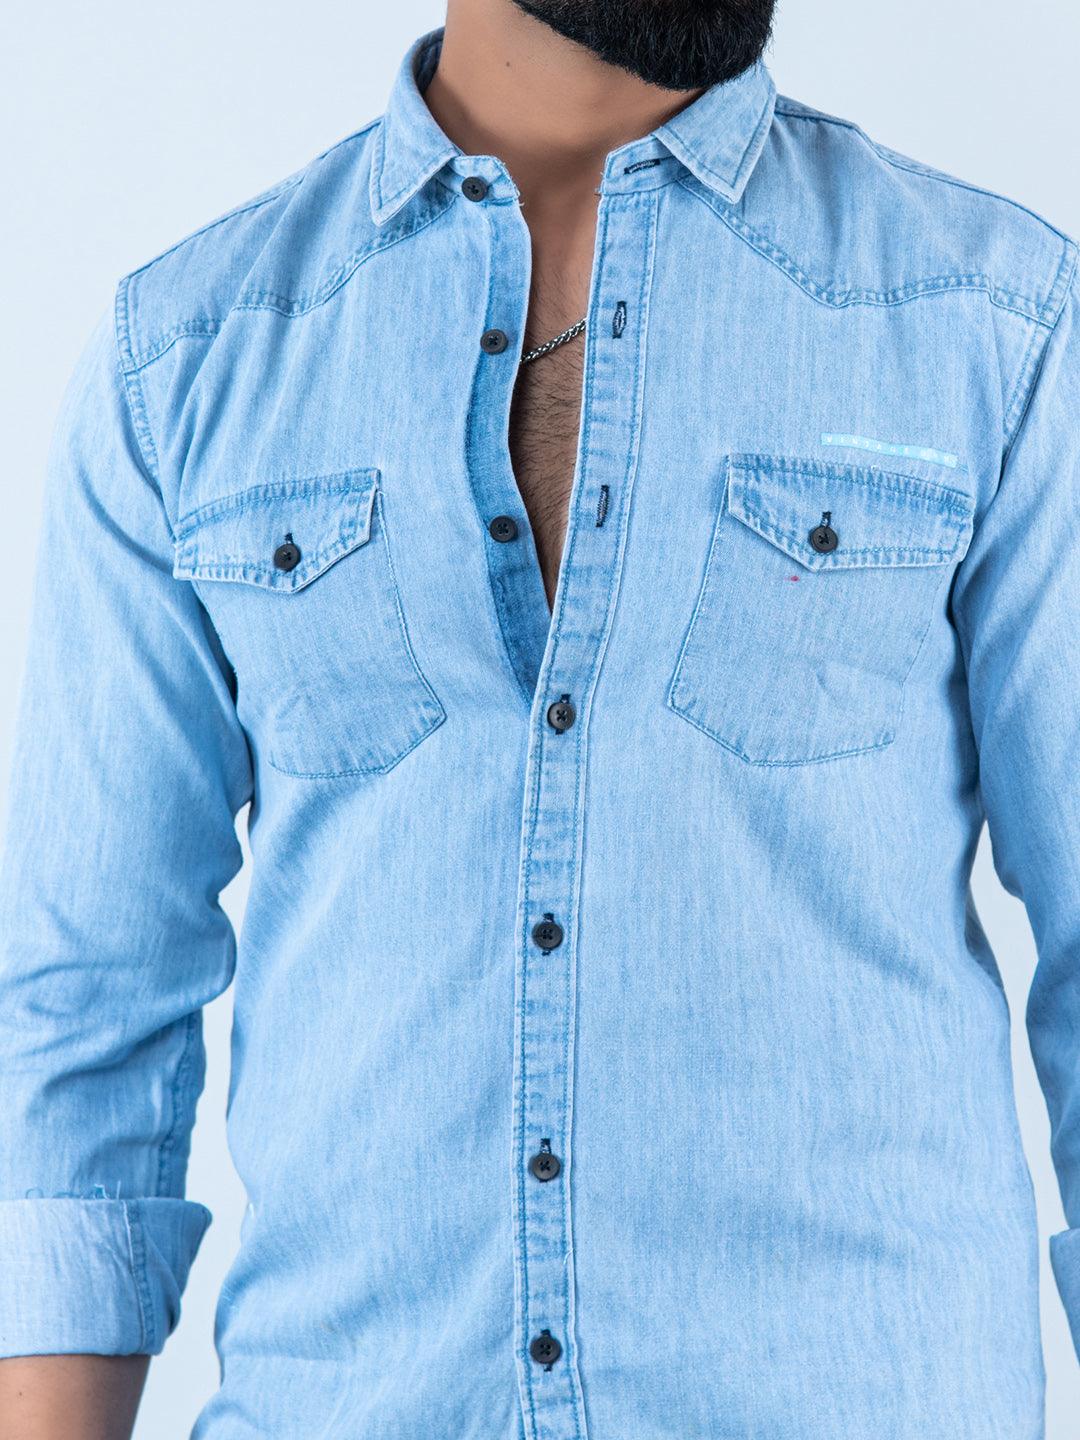 Men's Medium-sized Distressed Denim Button-down Shirt CASUCCI Light Blue Faded  Jeans Shirt Western Style - Etsy